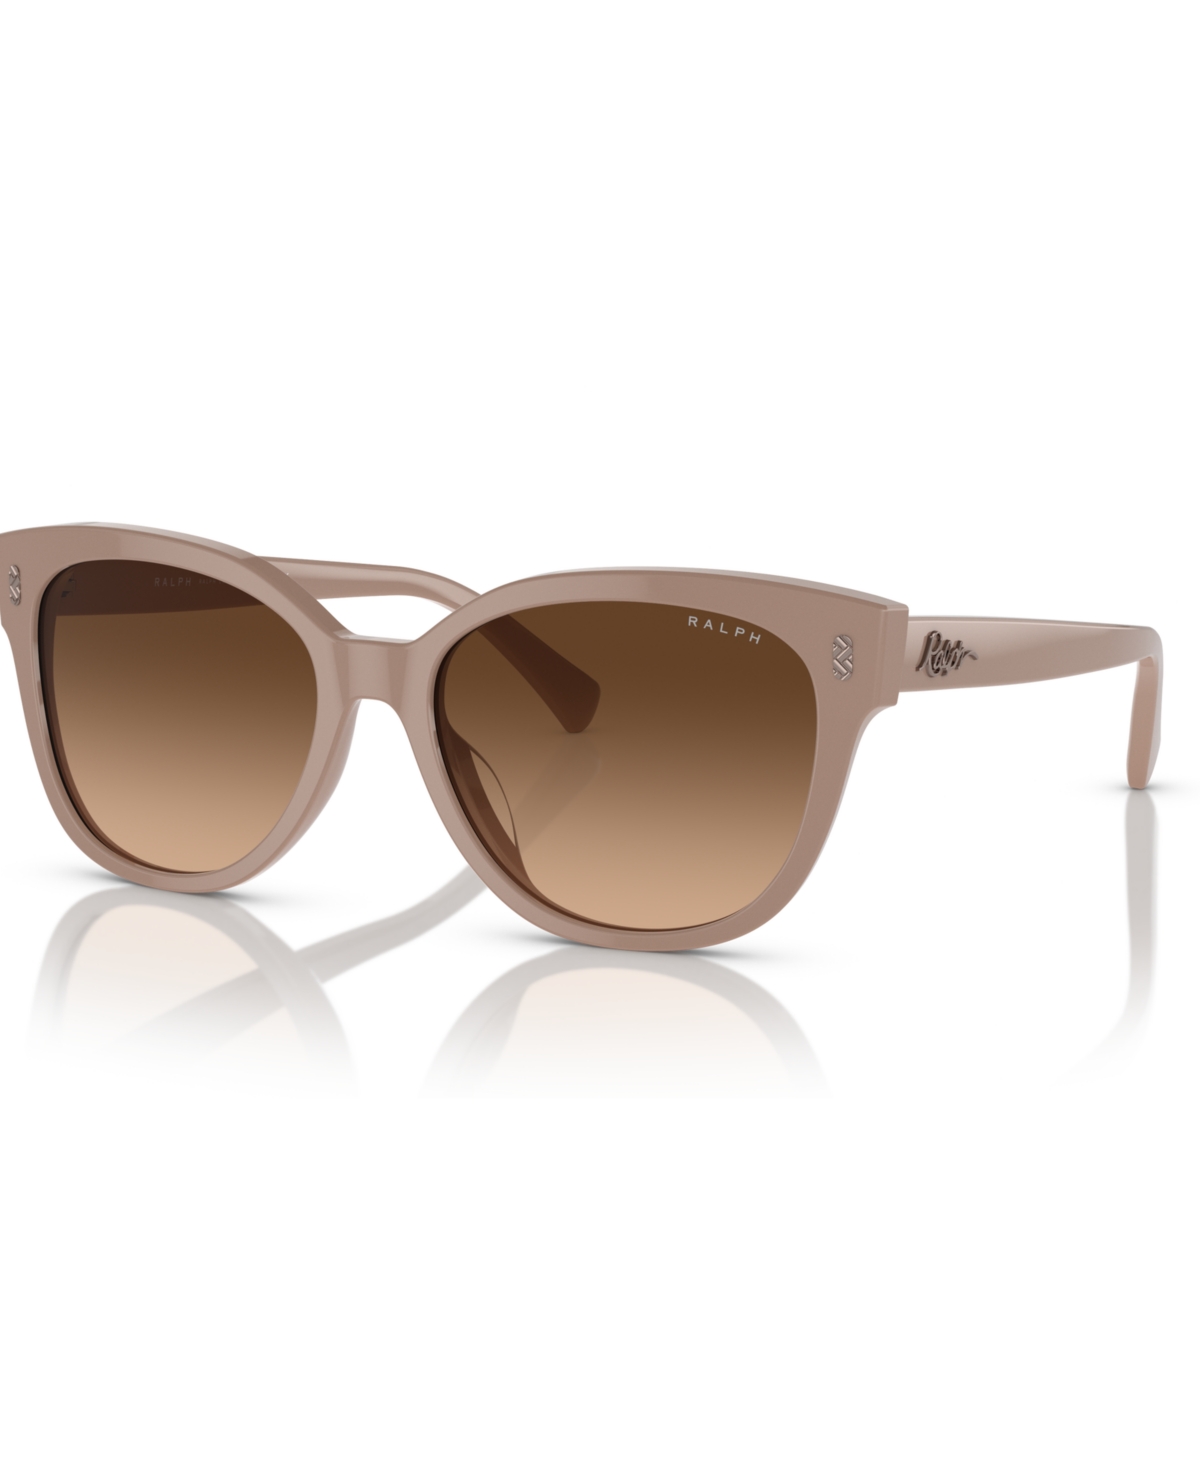 Women's Sunglasses, Gradient RA5305U - Shiny Solid Beige